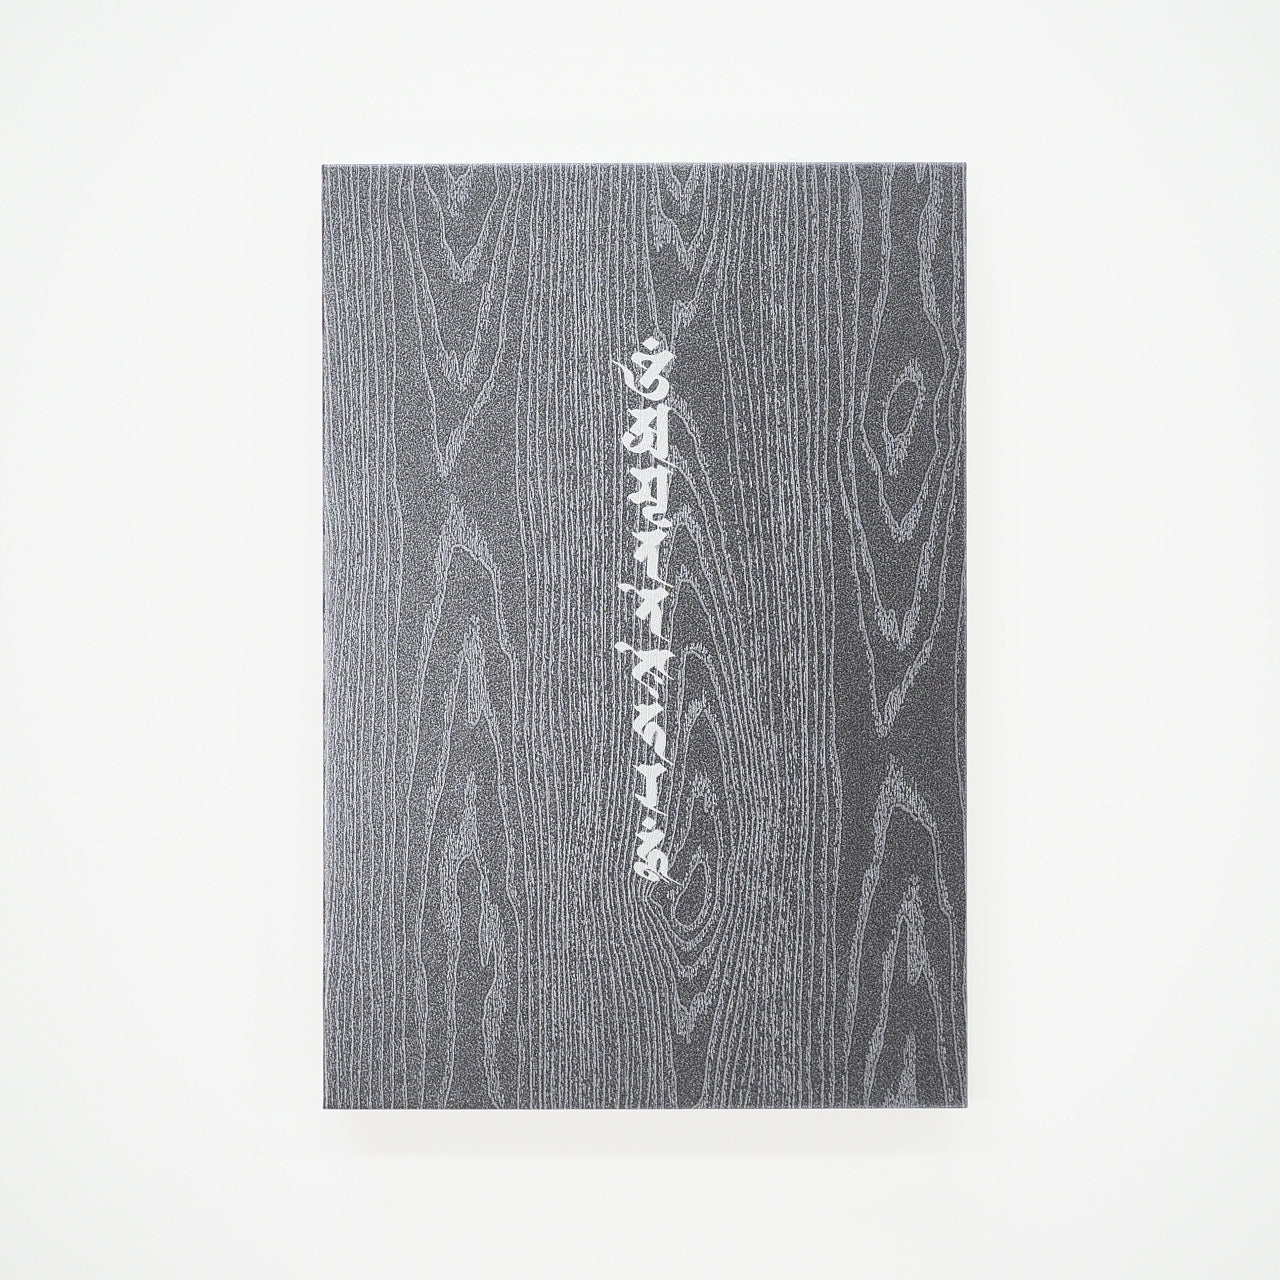 Goshuin book "Rinzen" flyer with Sanskrit characters and Amida Nyorai